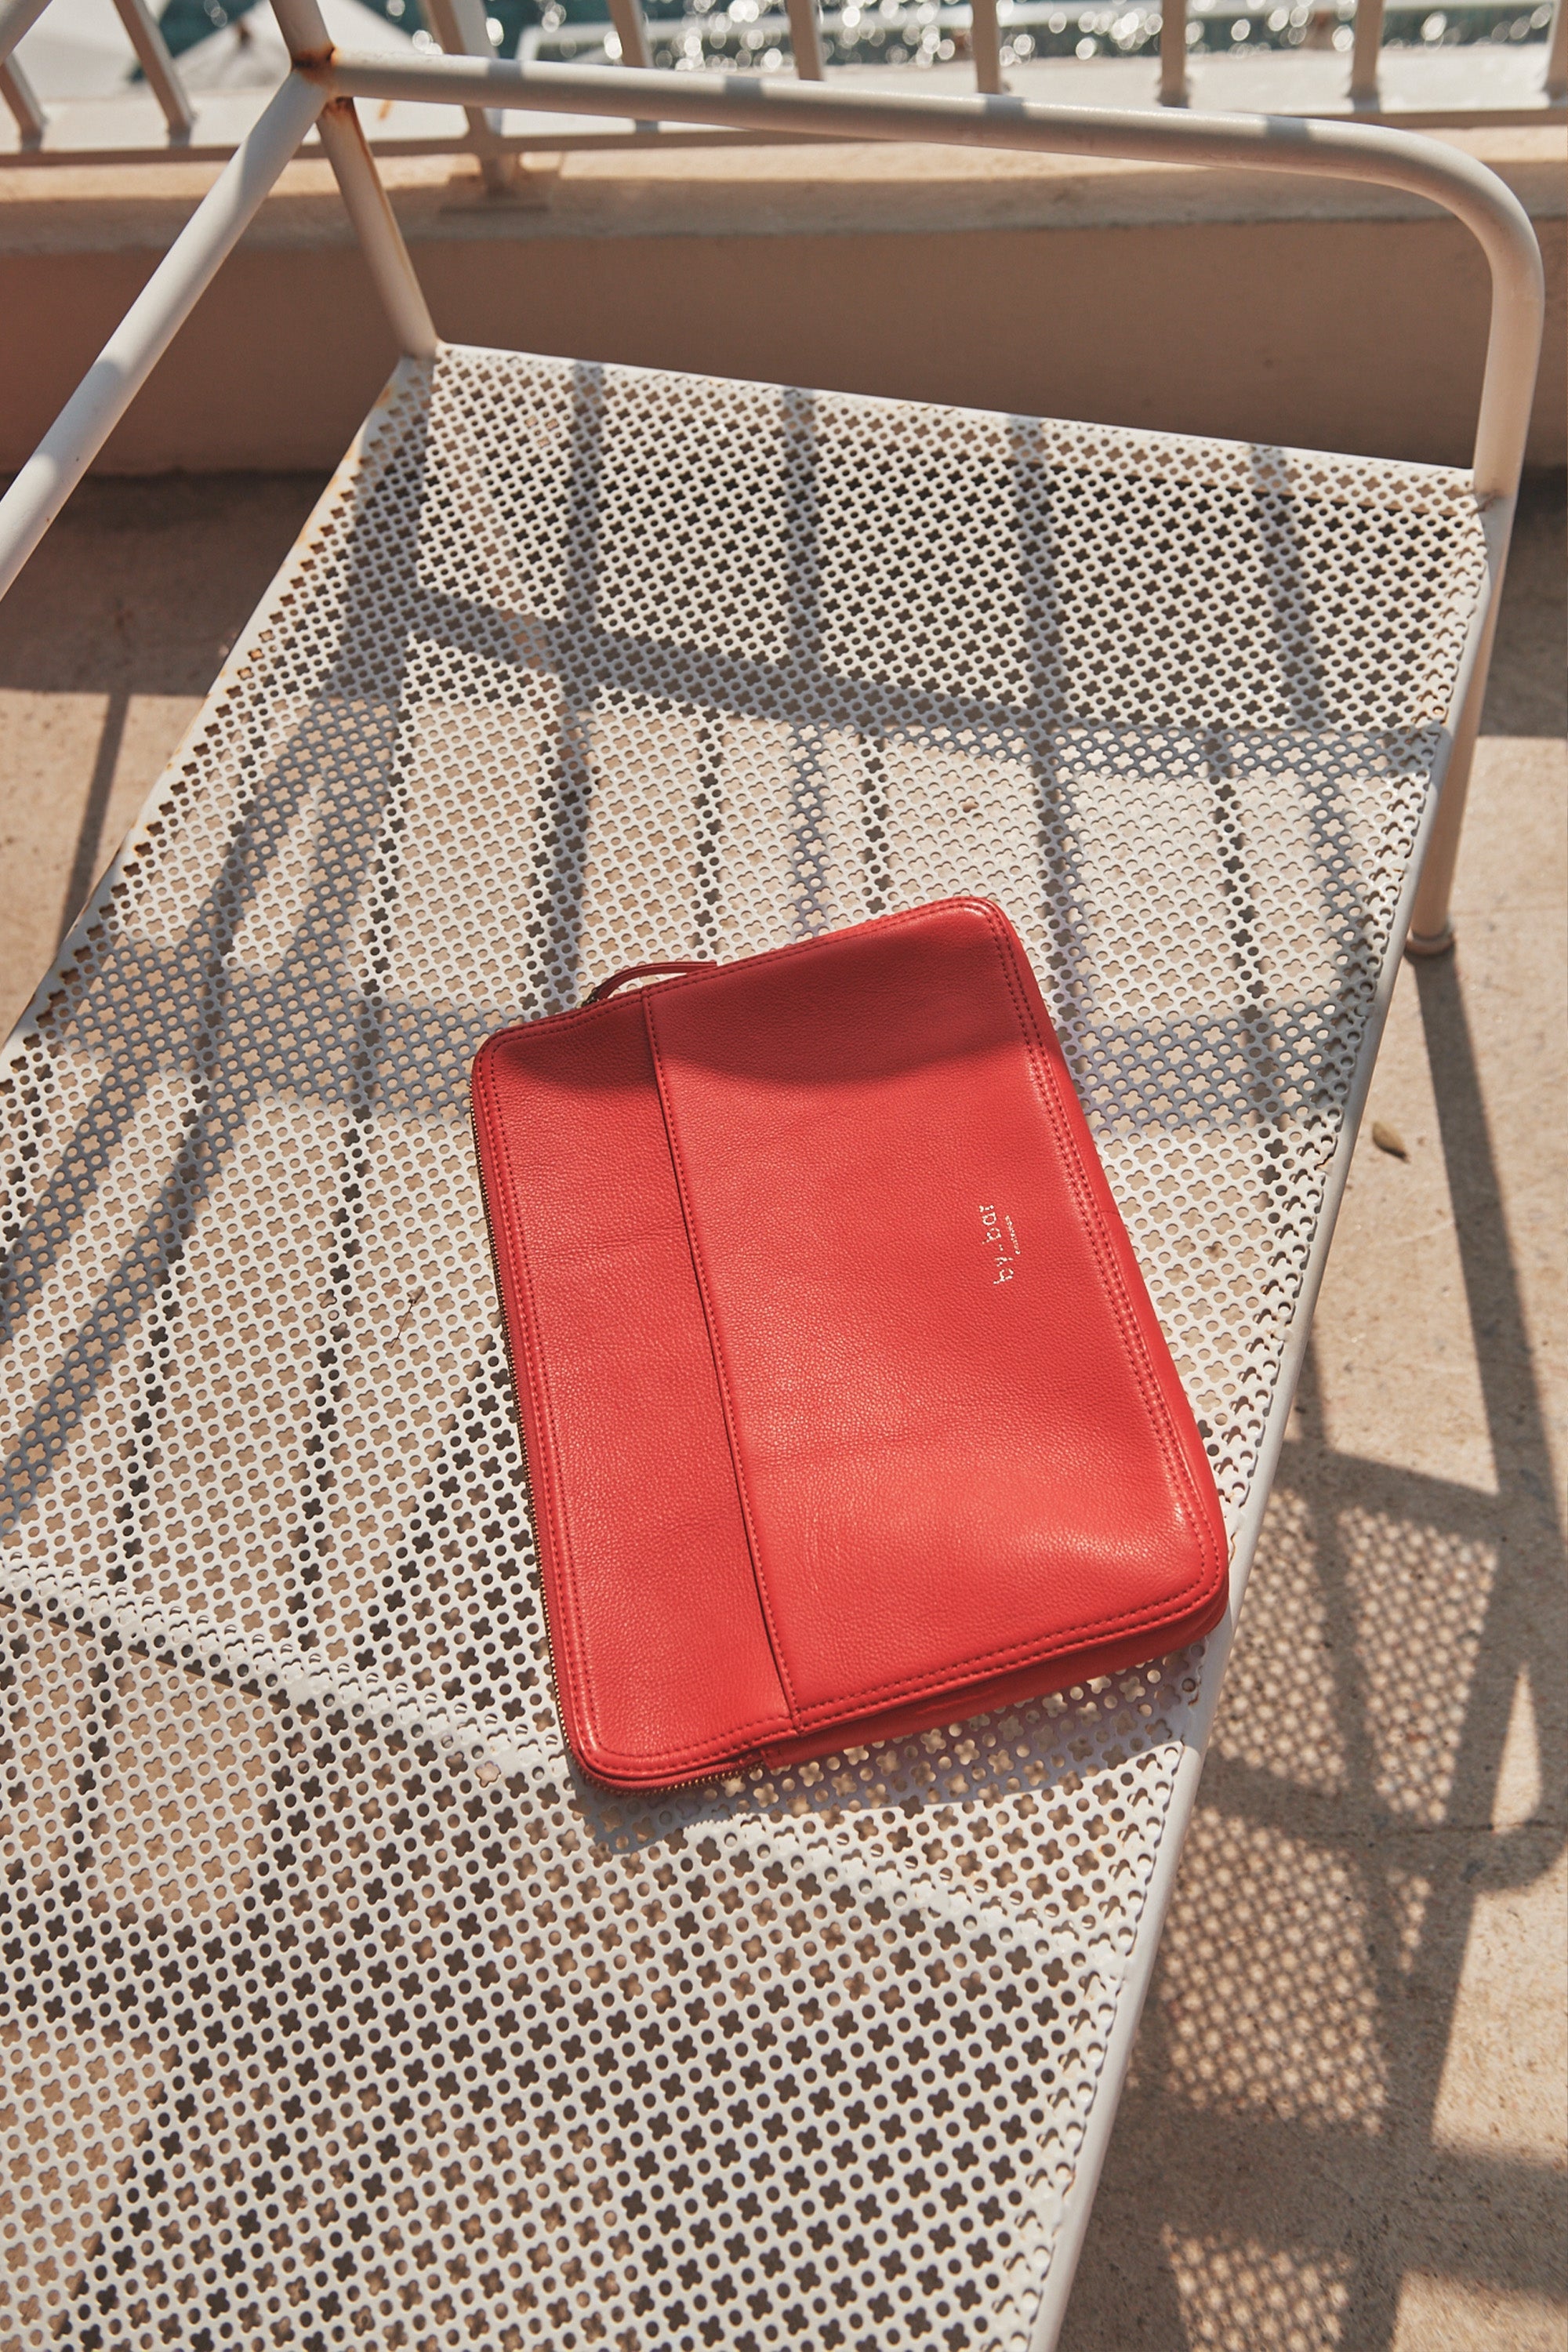 laptop bag | poppy-red